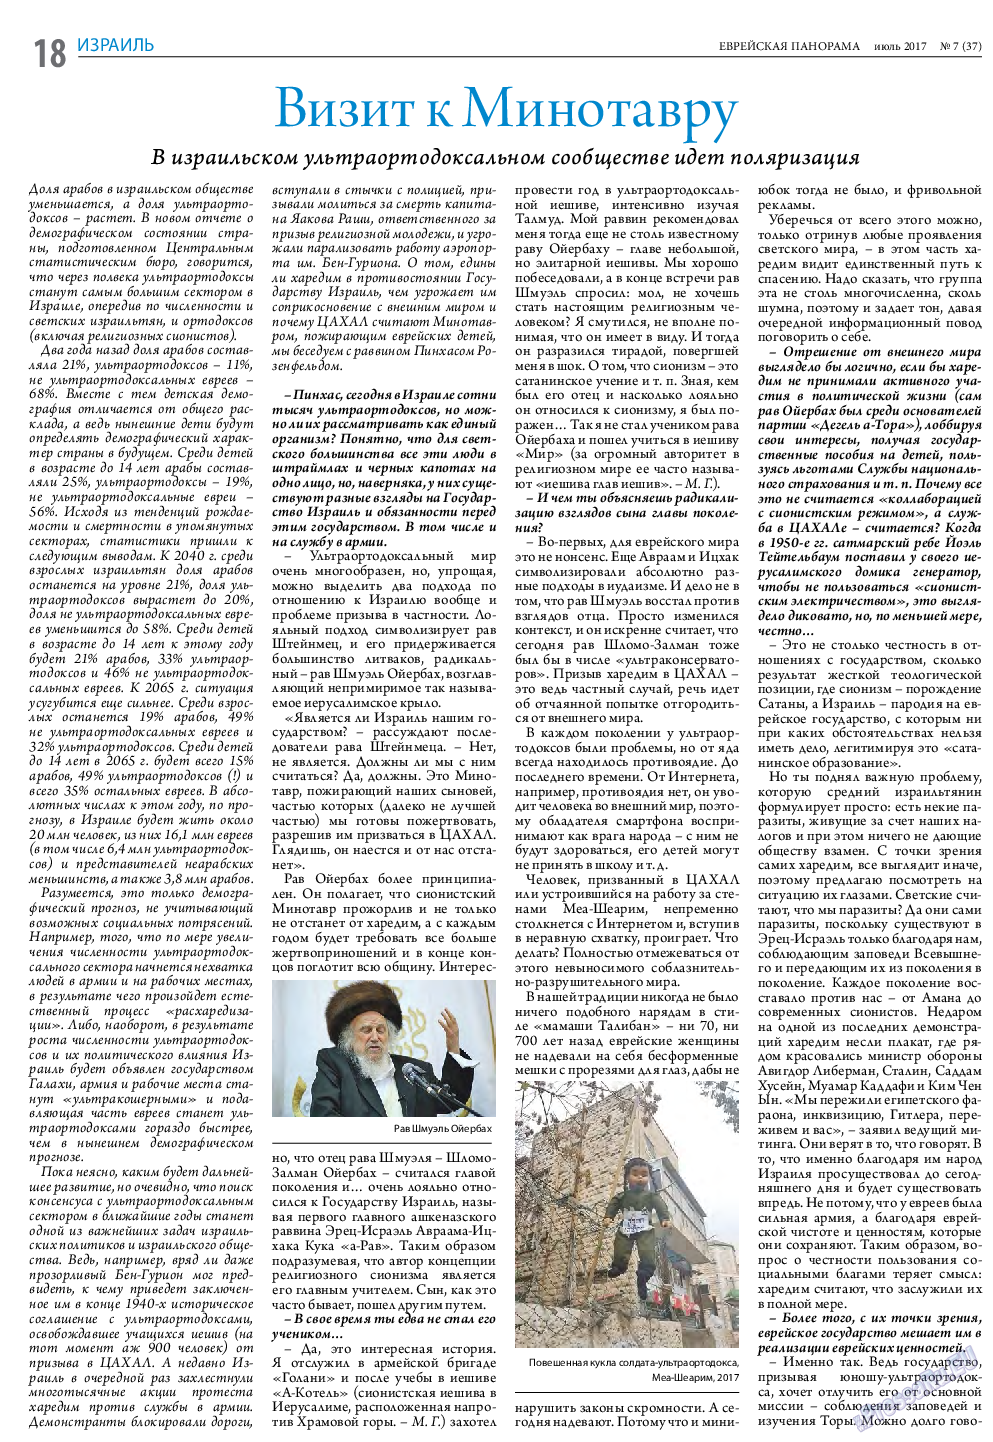 Еврейская панорама, газета. 2017 №7 стр.18